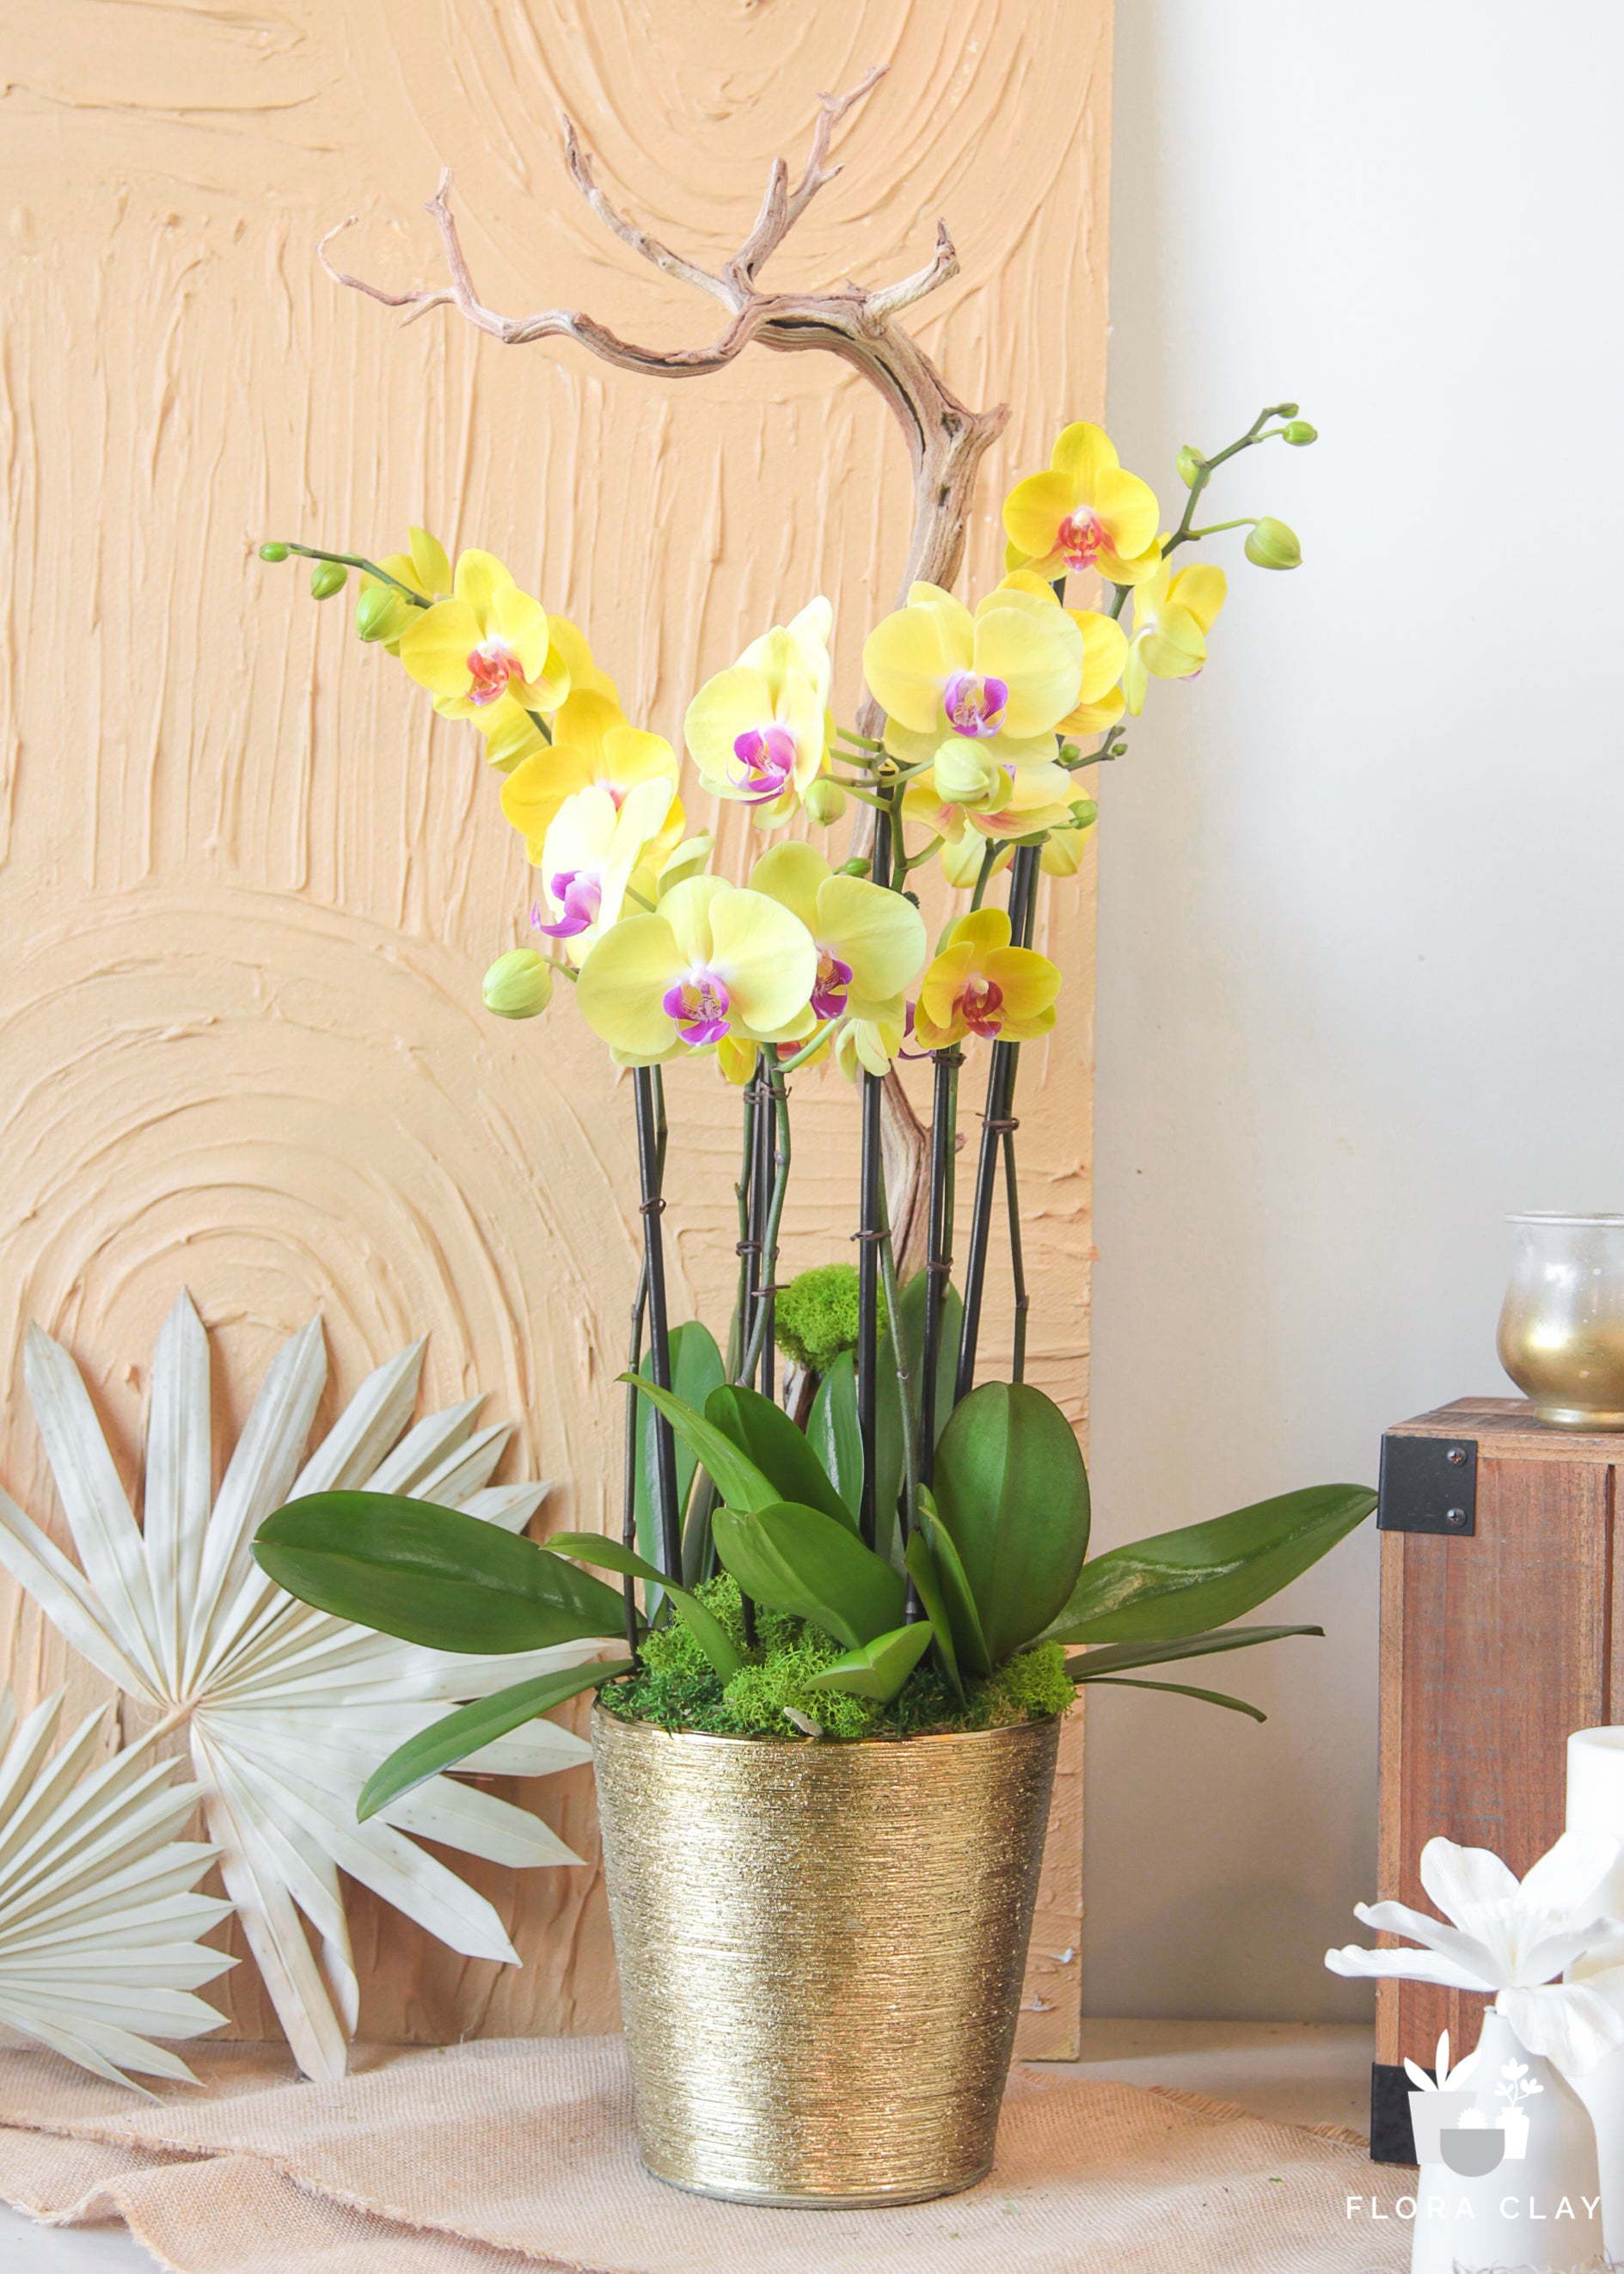 safflower-orchid-arrangement-floraclay-1.jpg